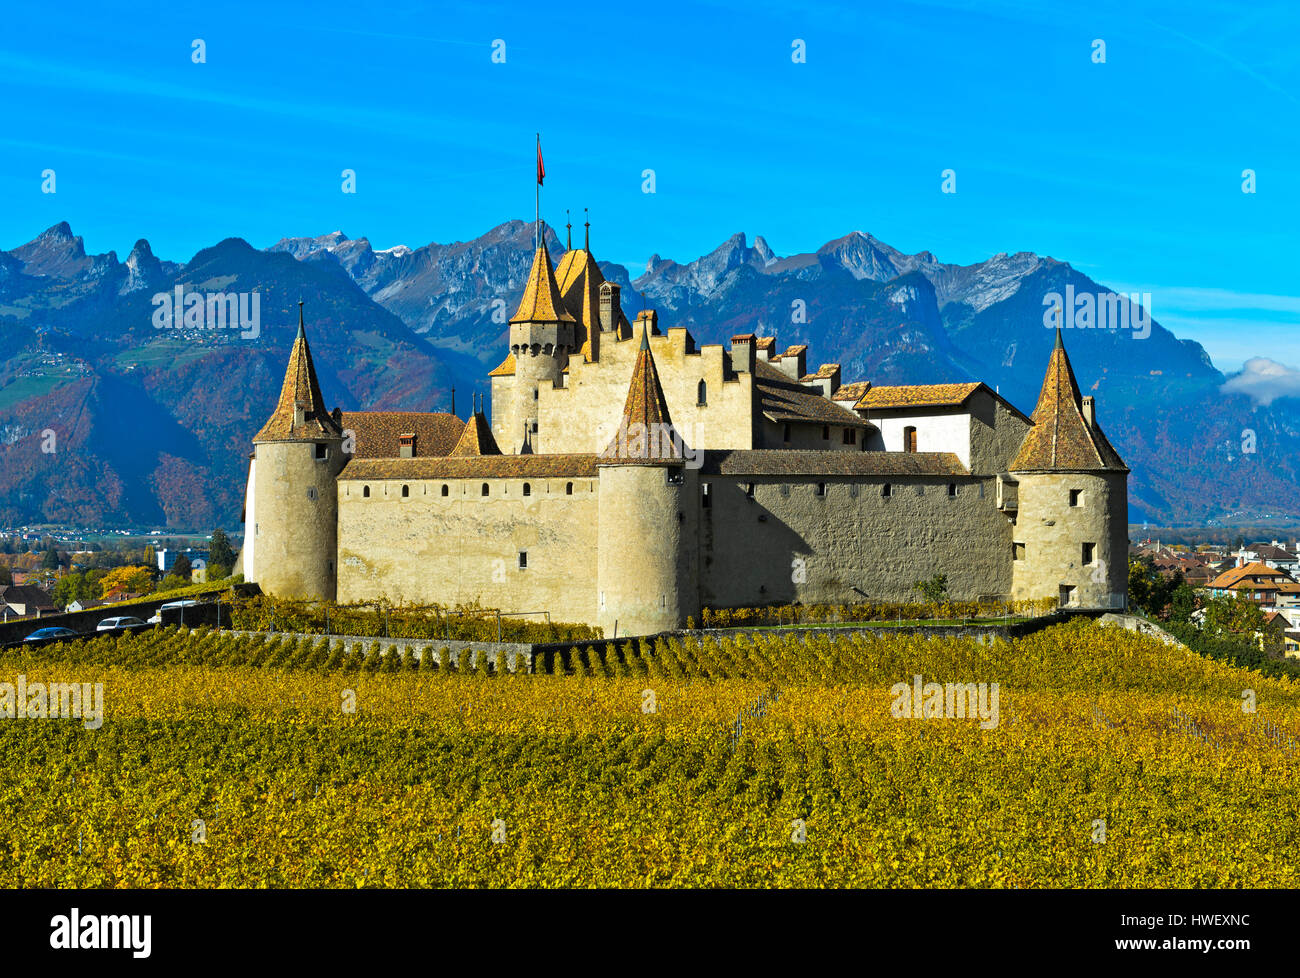 mel Effektivitet Rettelse Rebe und Wein Museum Schloss Aigle, Chateau d ' Aigle, Aigle, Waadt,  Schweiz Stockfotografie - Alamy